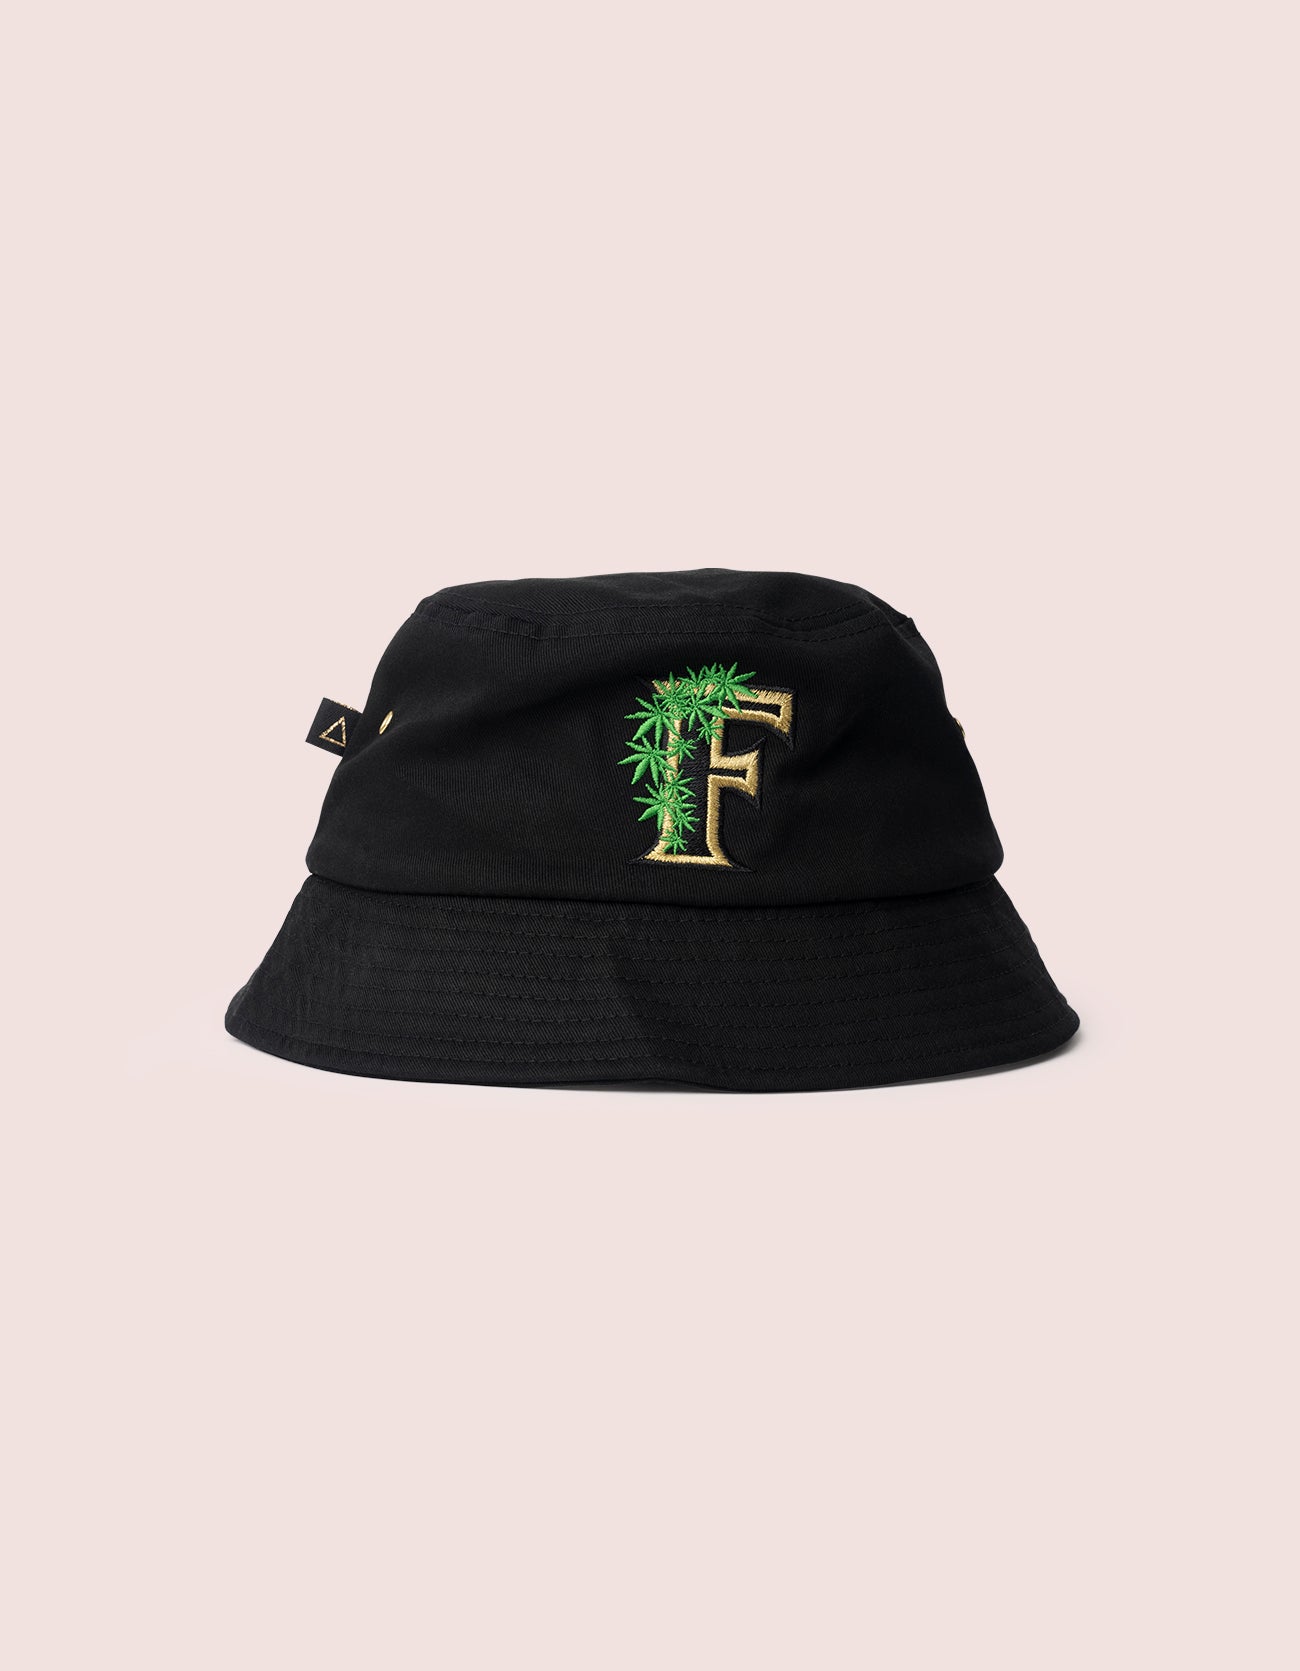 Flee Farms Black Bucket Hat